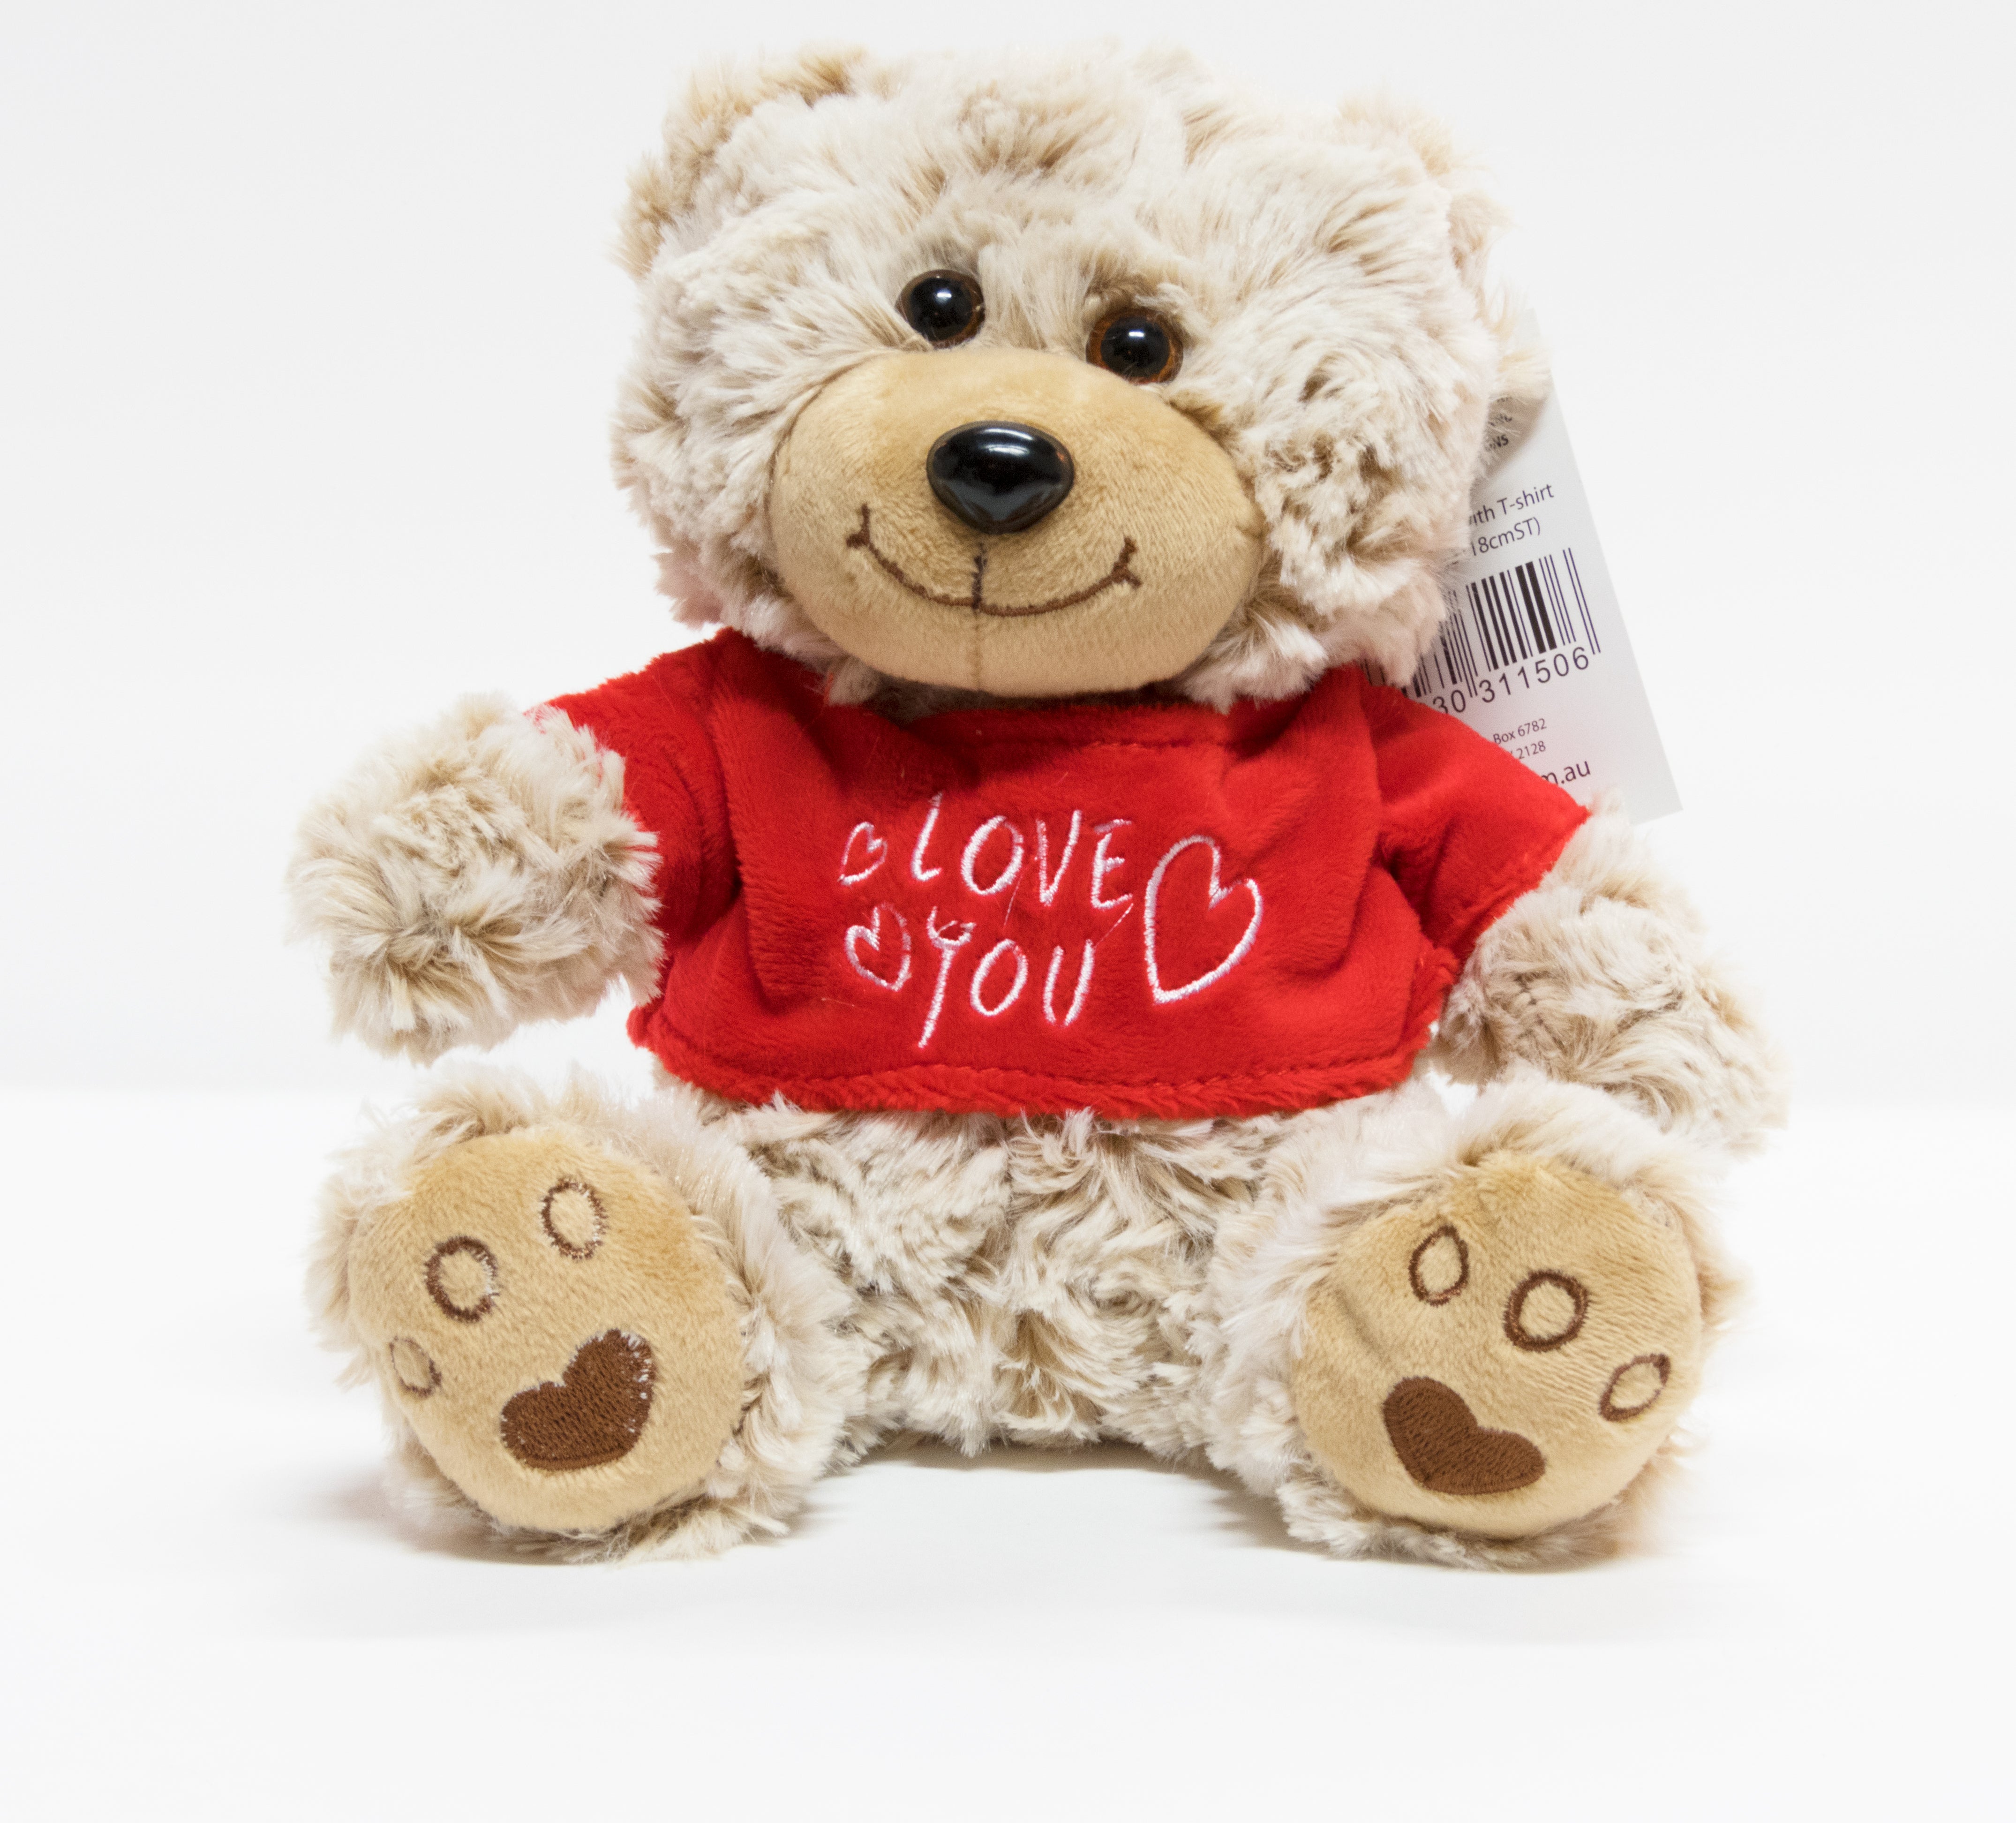 Create Your Own Beauty Box - Thomas Teddy Bear with T-shirt "Love You"